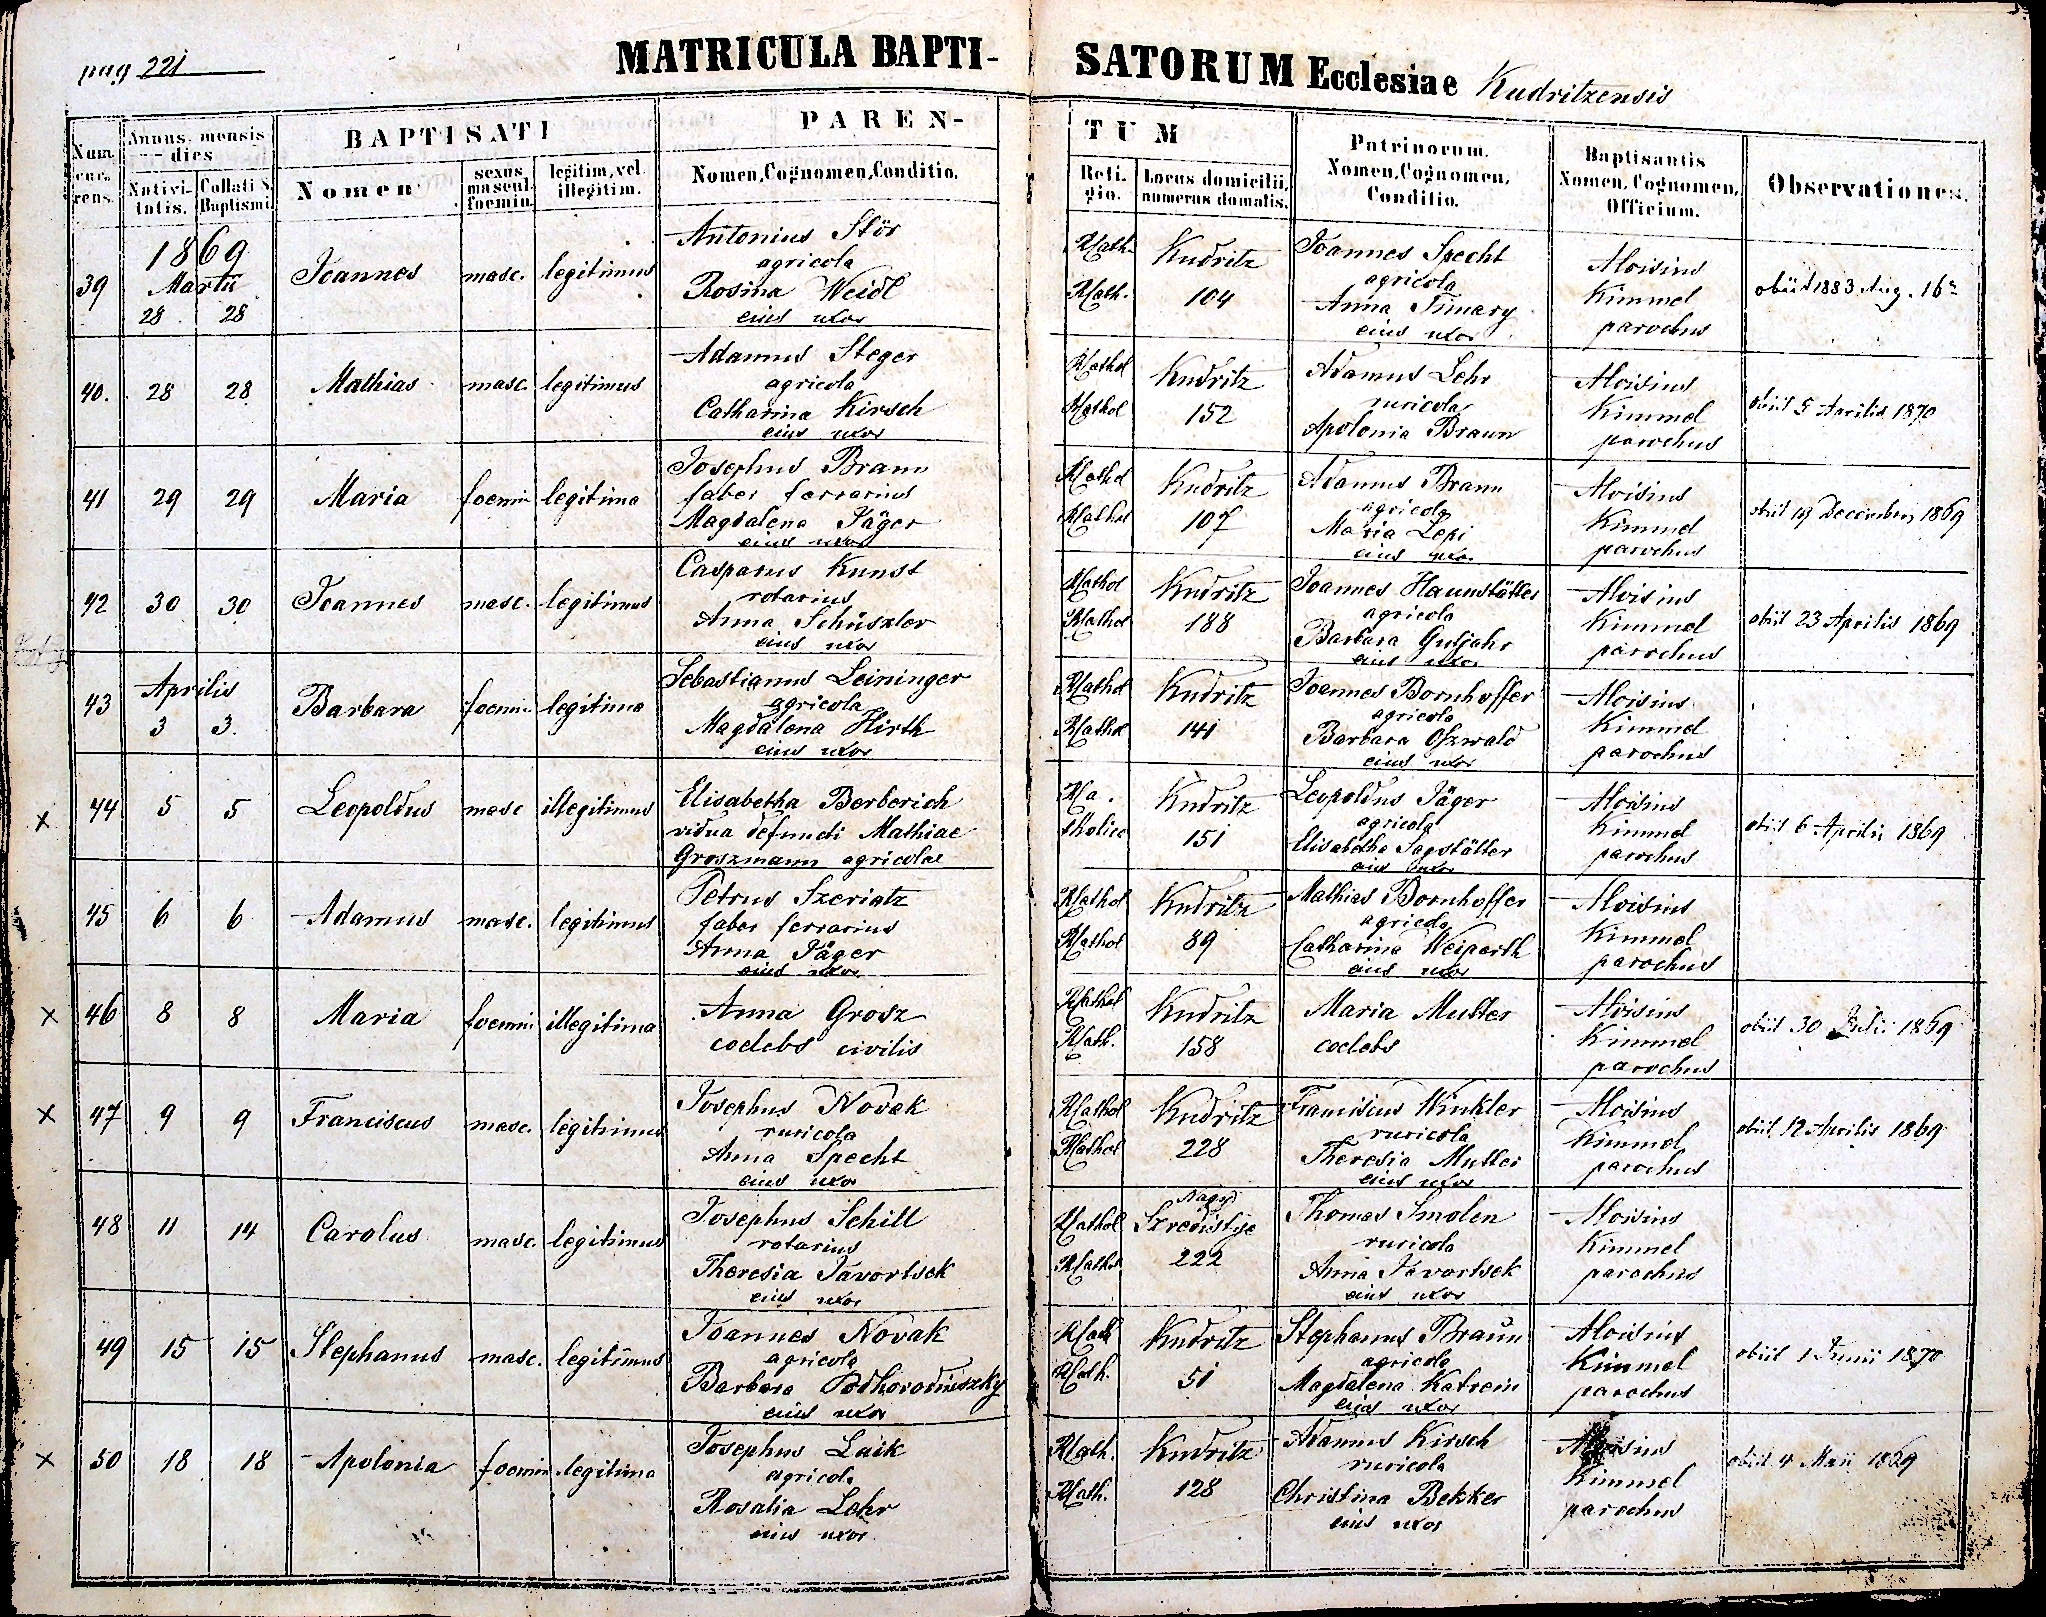 images/church_records/BIRTHS/1852-1870B/221